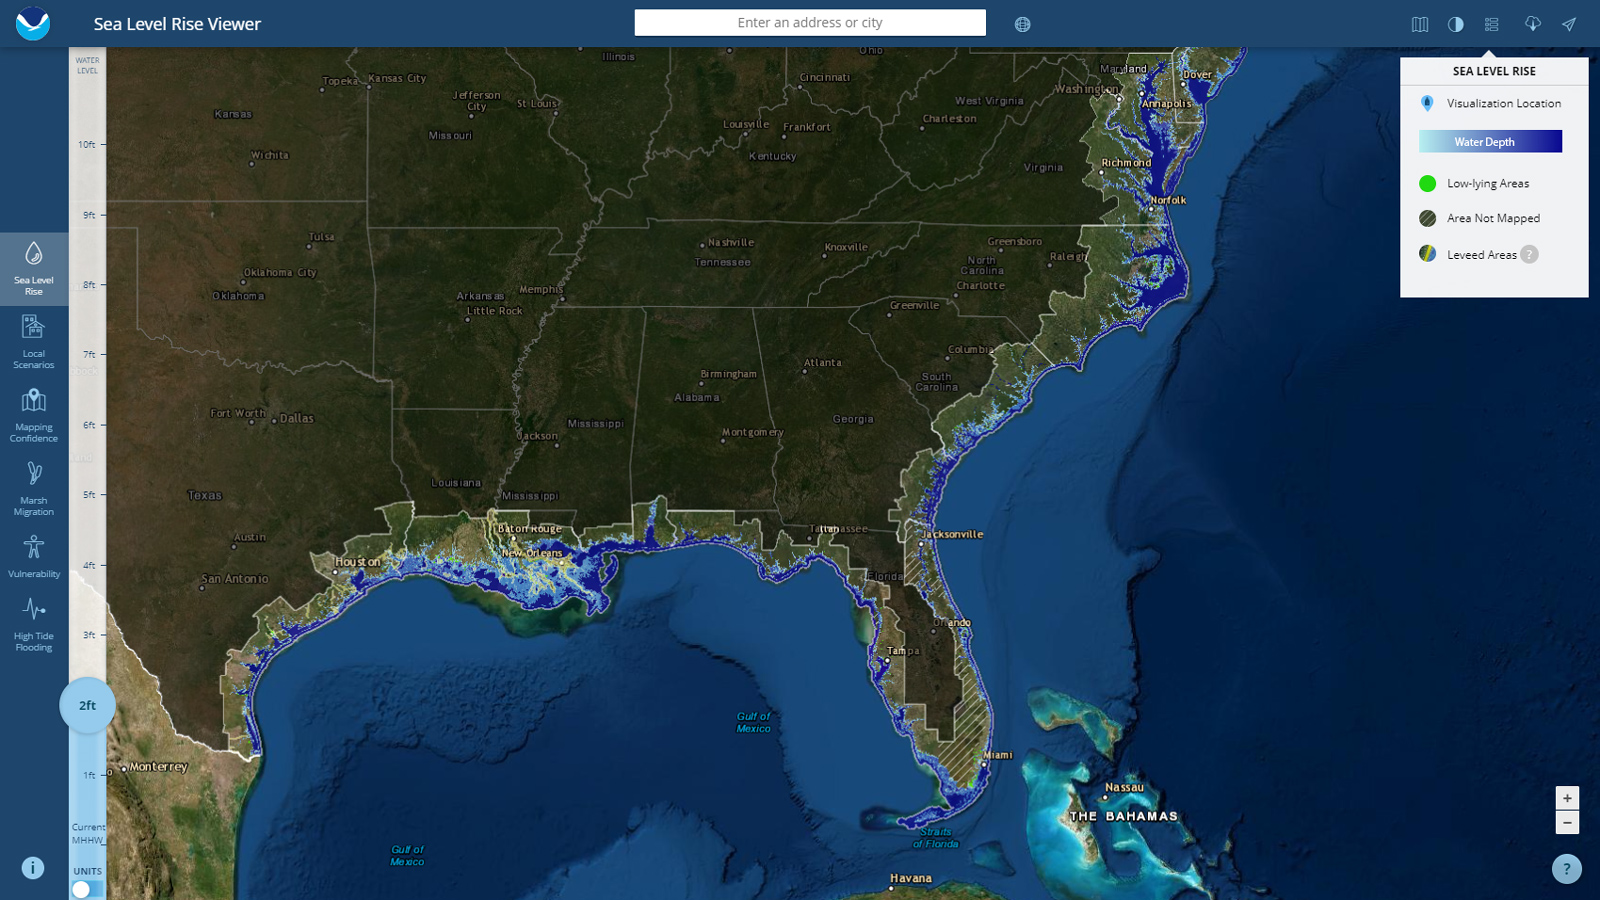 DatasetGallery Sea Level Rise Viewer Thumb 16x9 